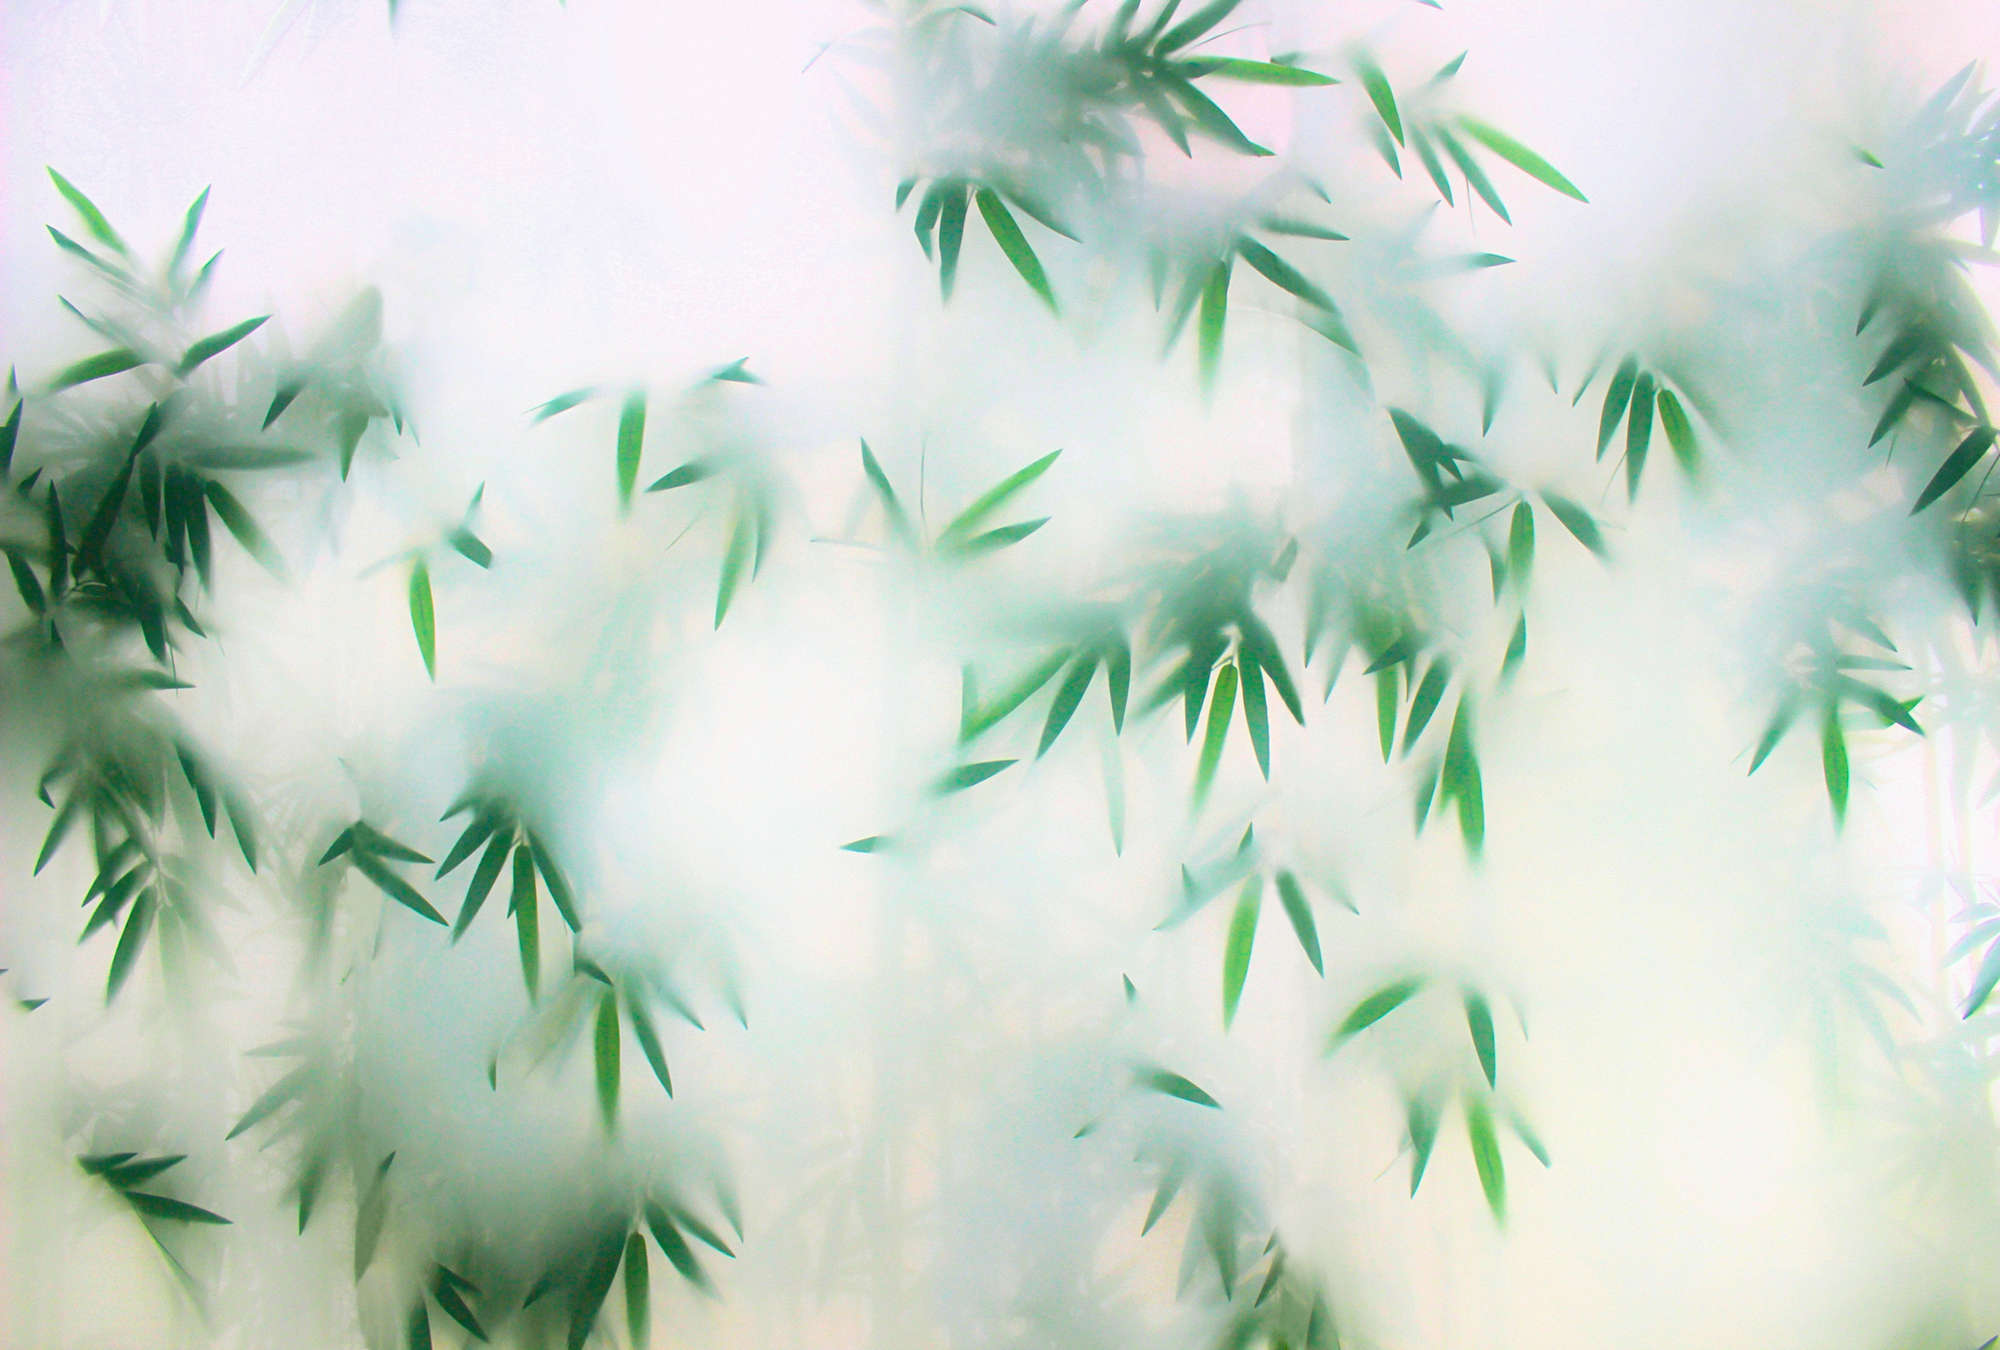             Panda Paradise 3 - foglie foto sfondo bambù nella nebbia
        